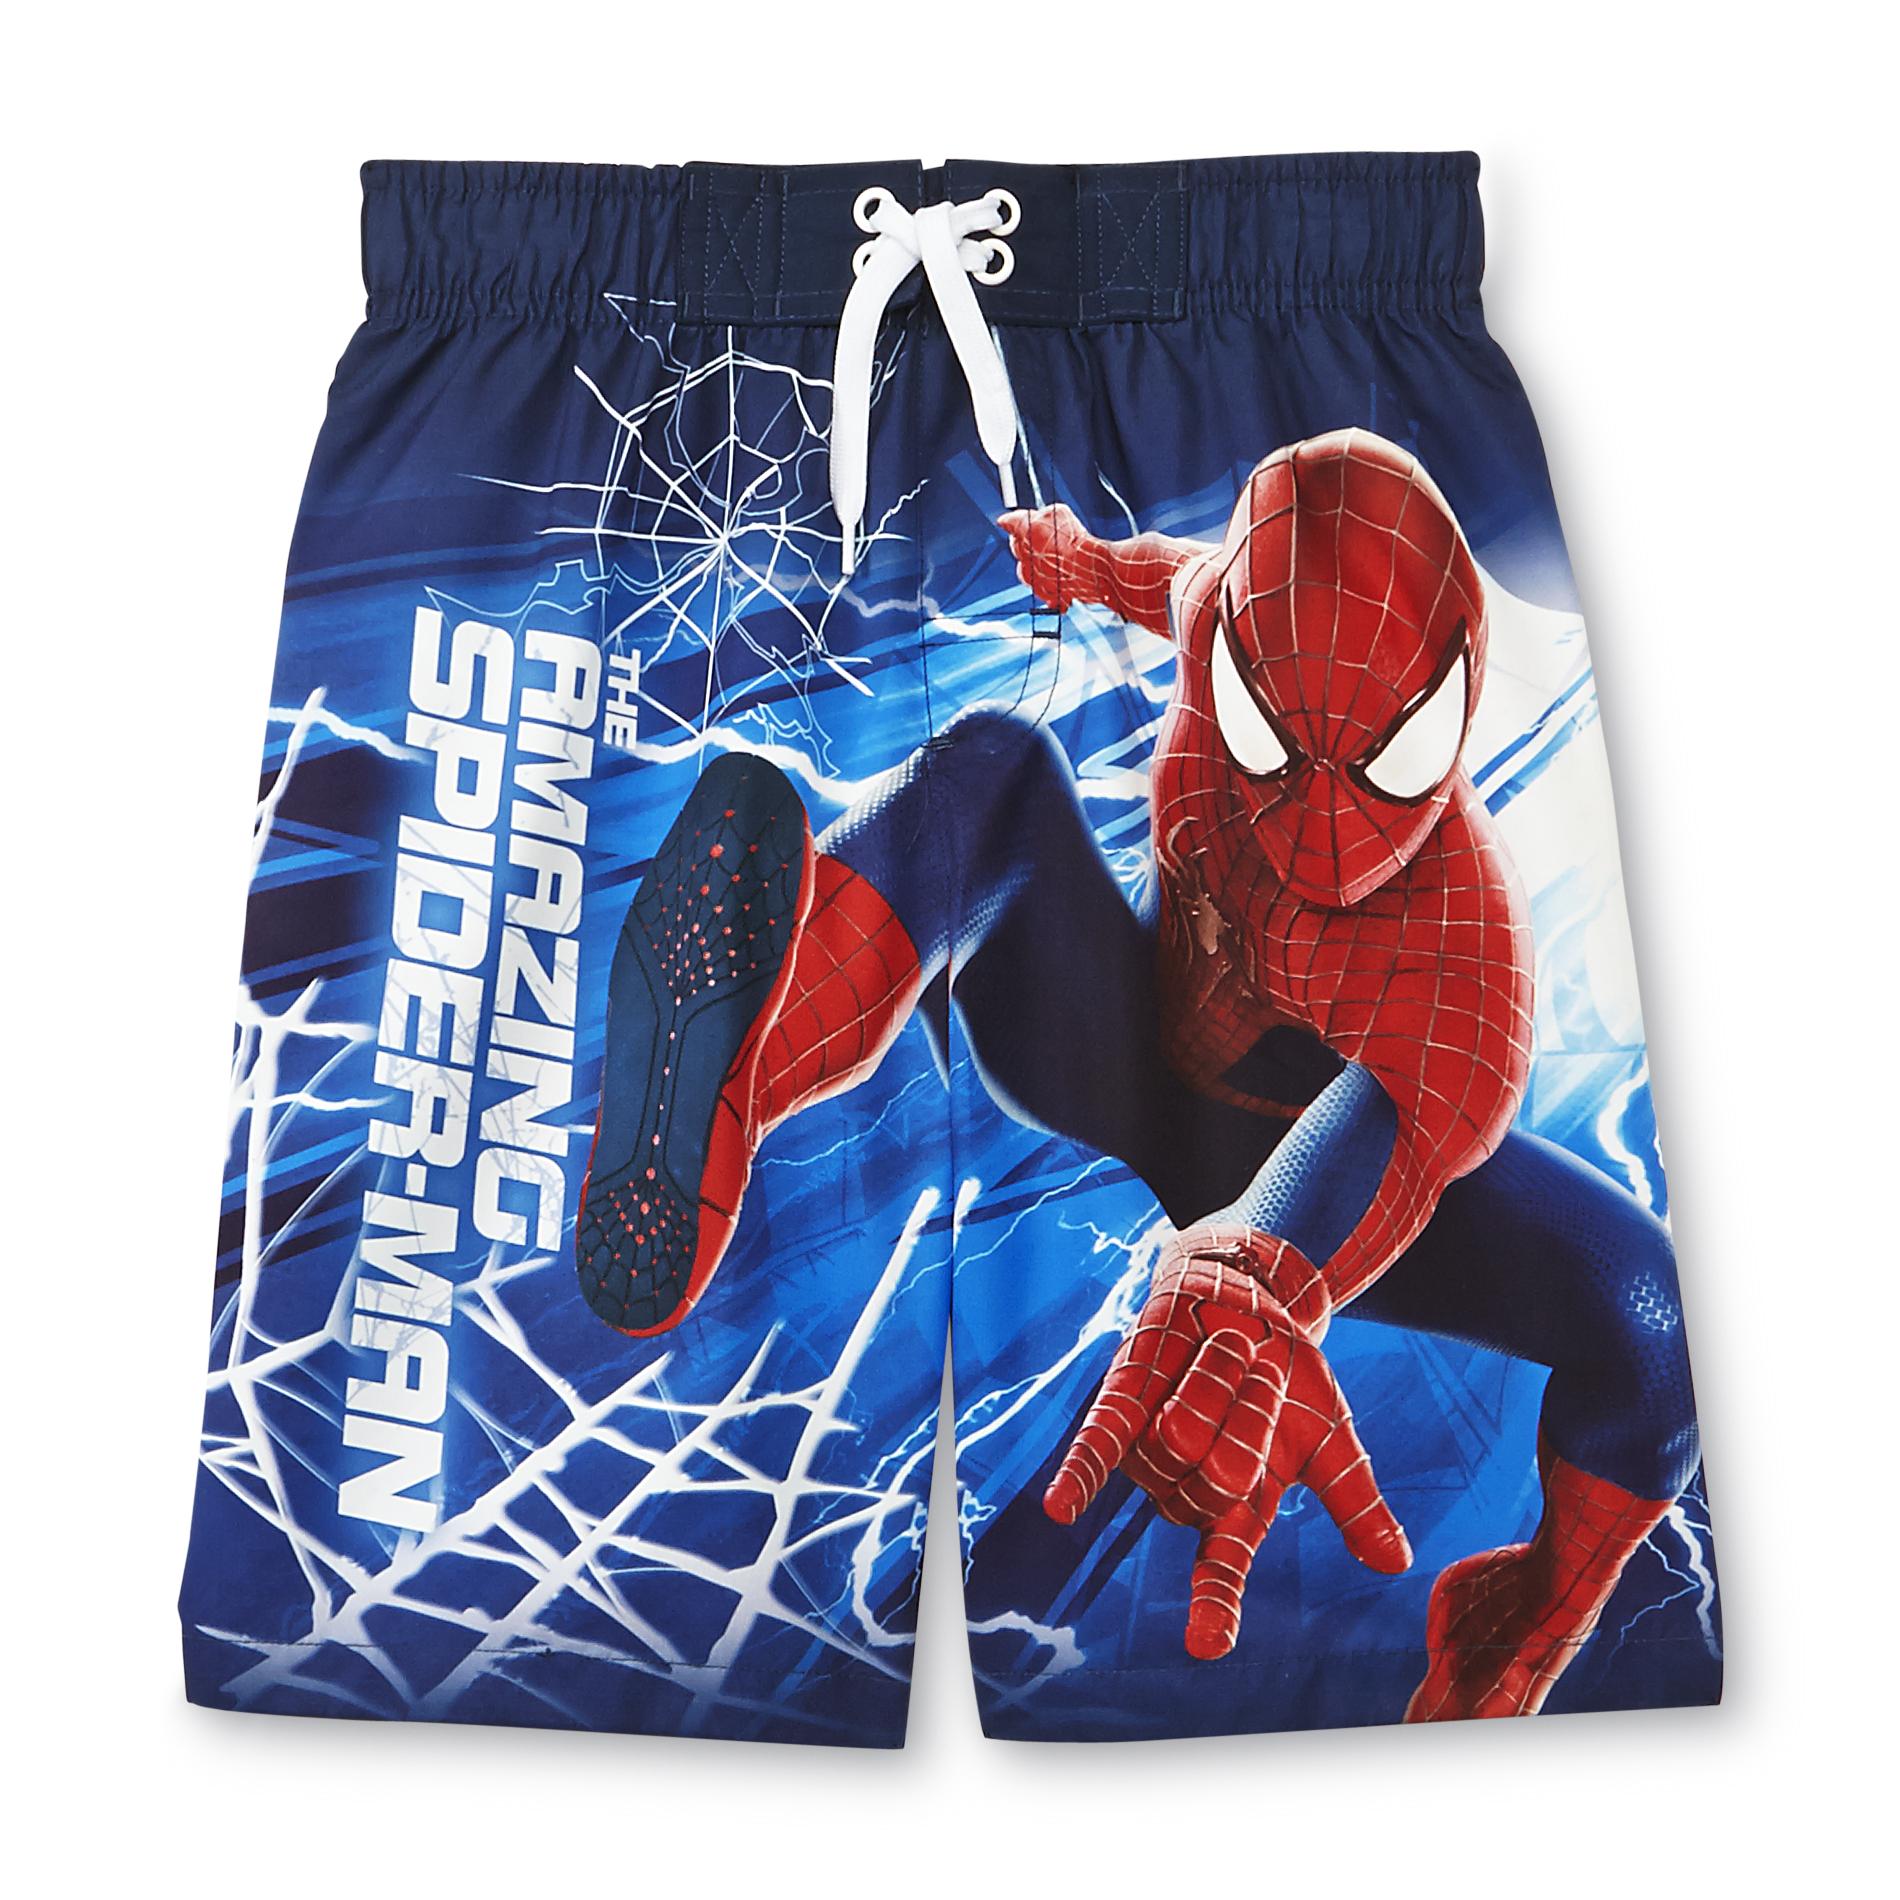 Marvel Comics The Amazing Spider-Man 2 Boy's Graphic Swim Trunks